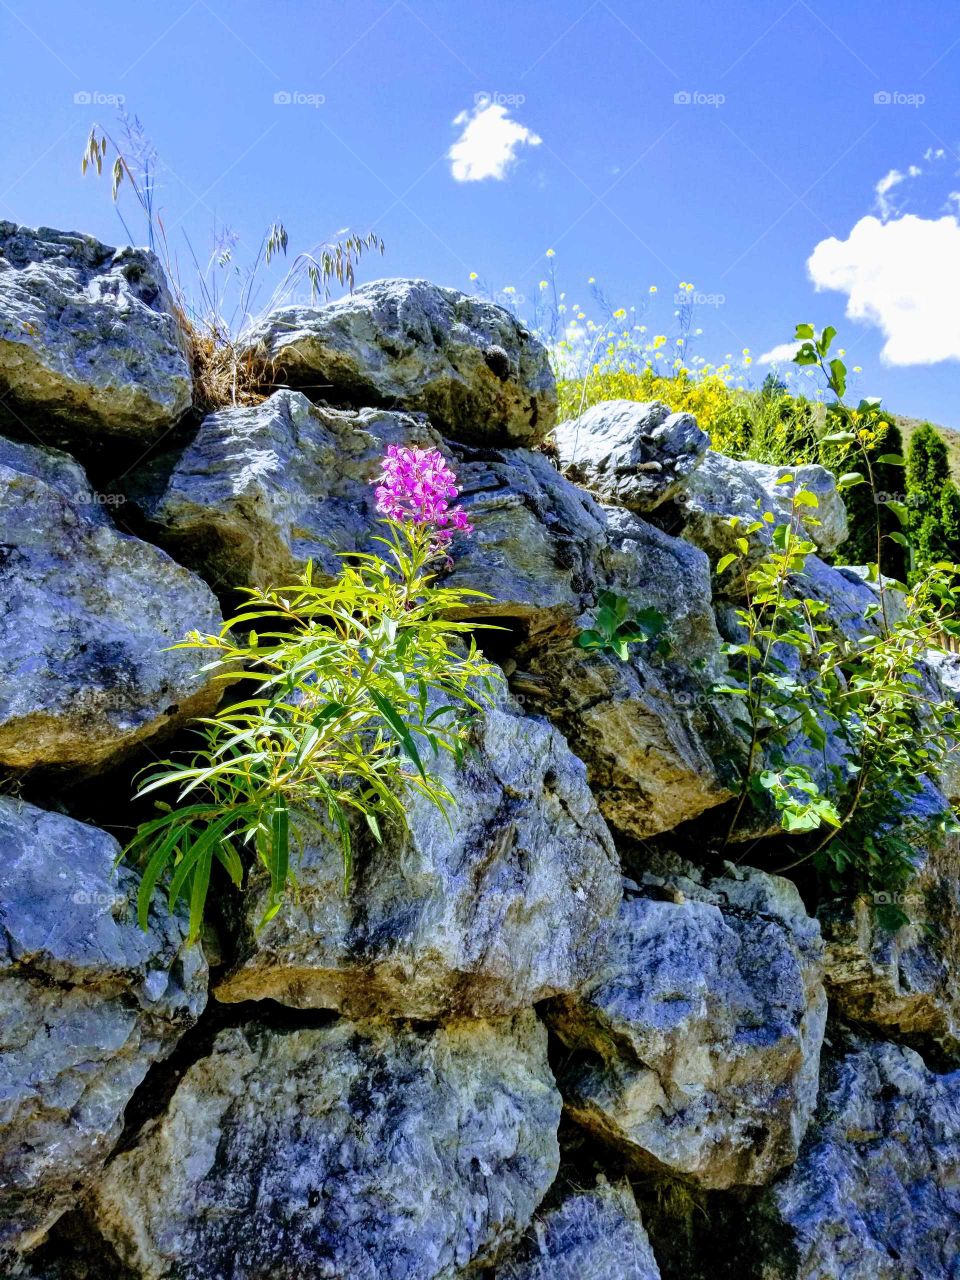 beautiful flower emerging from rock wall